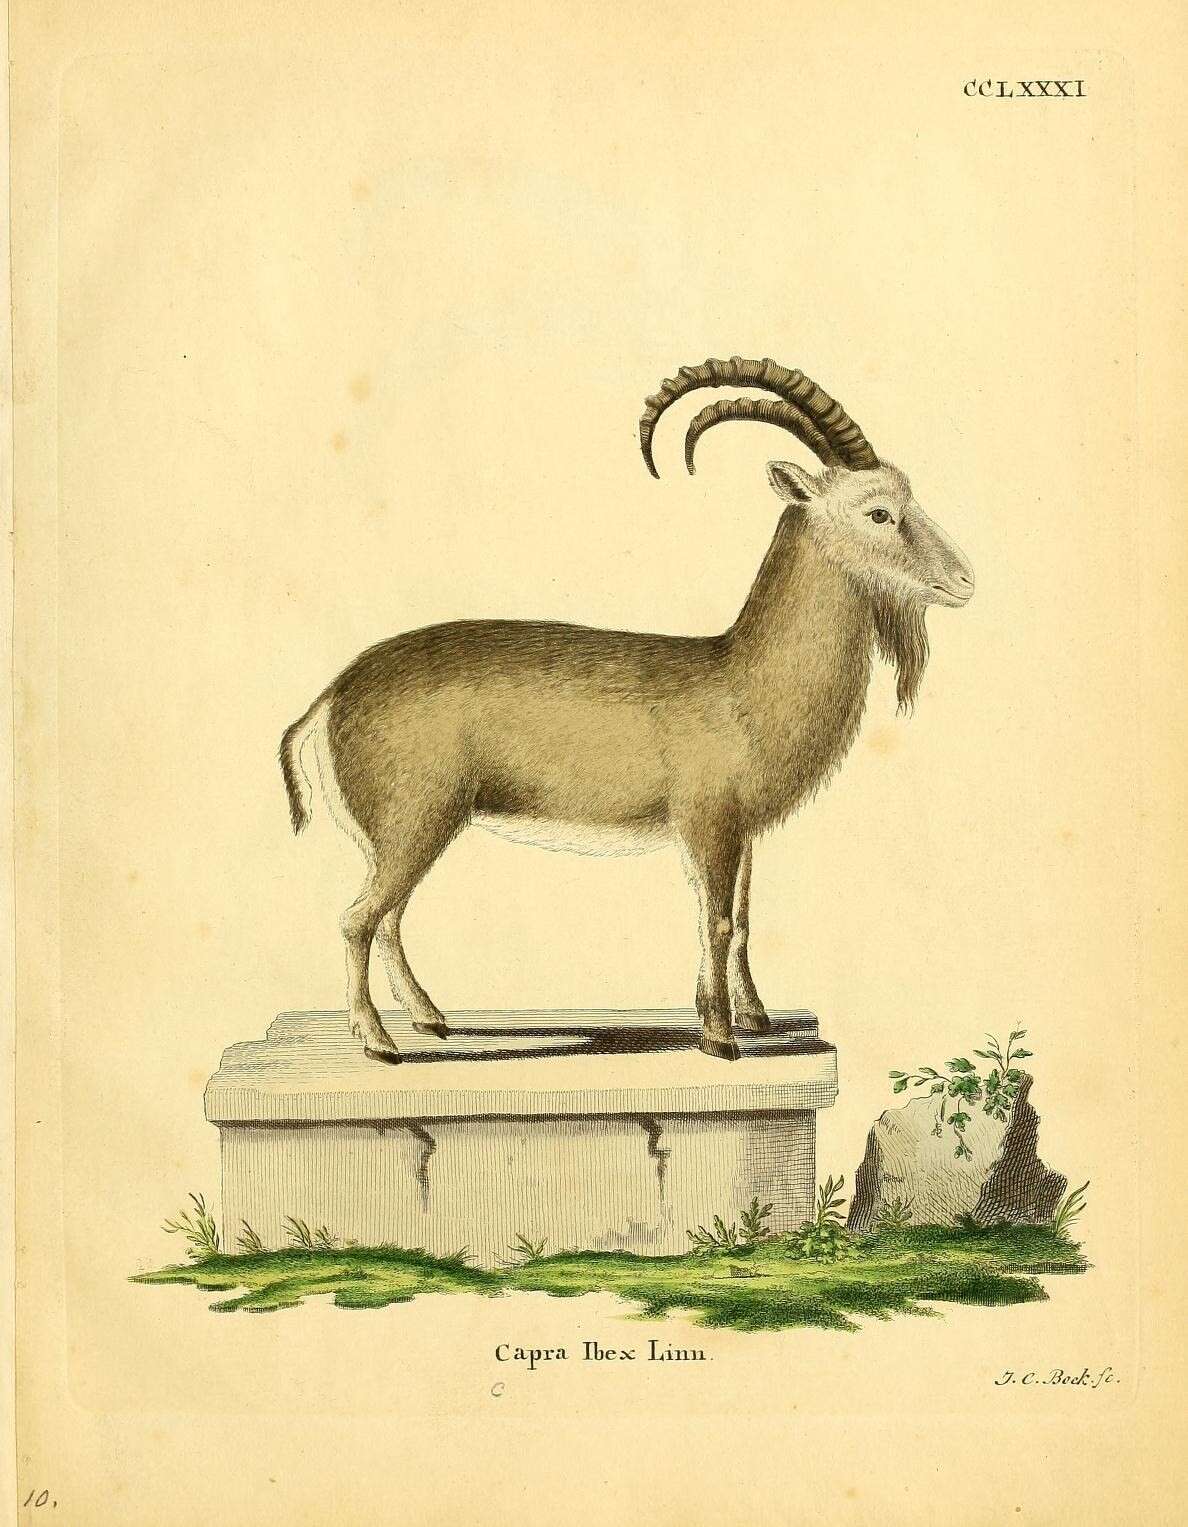 Image of goats